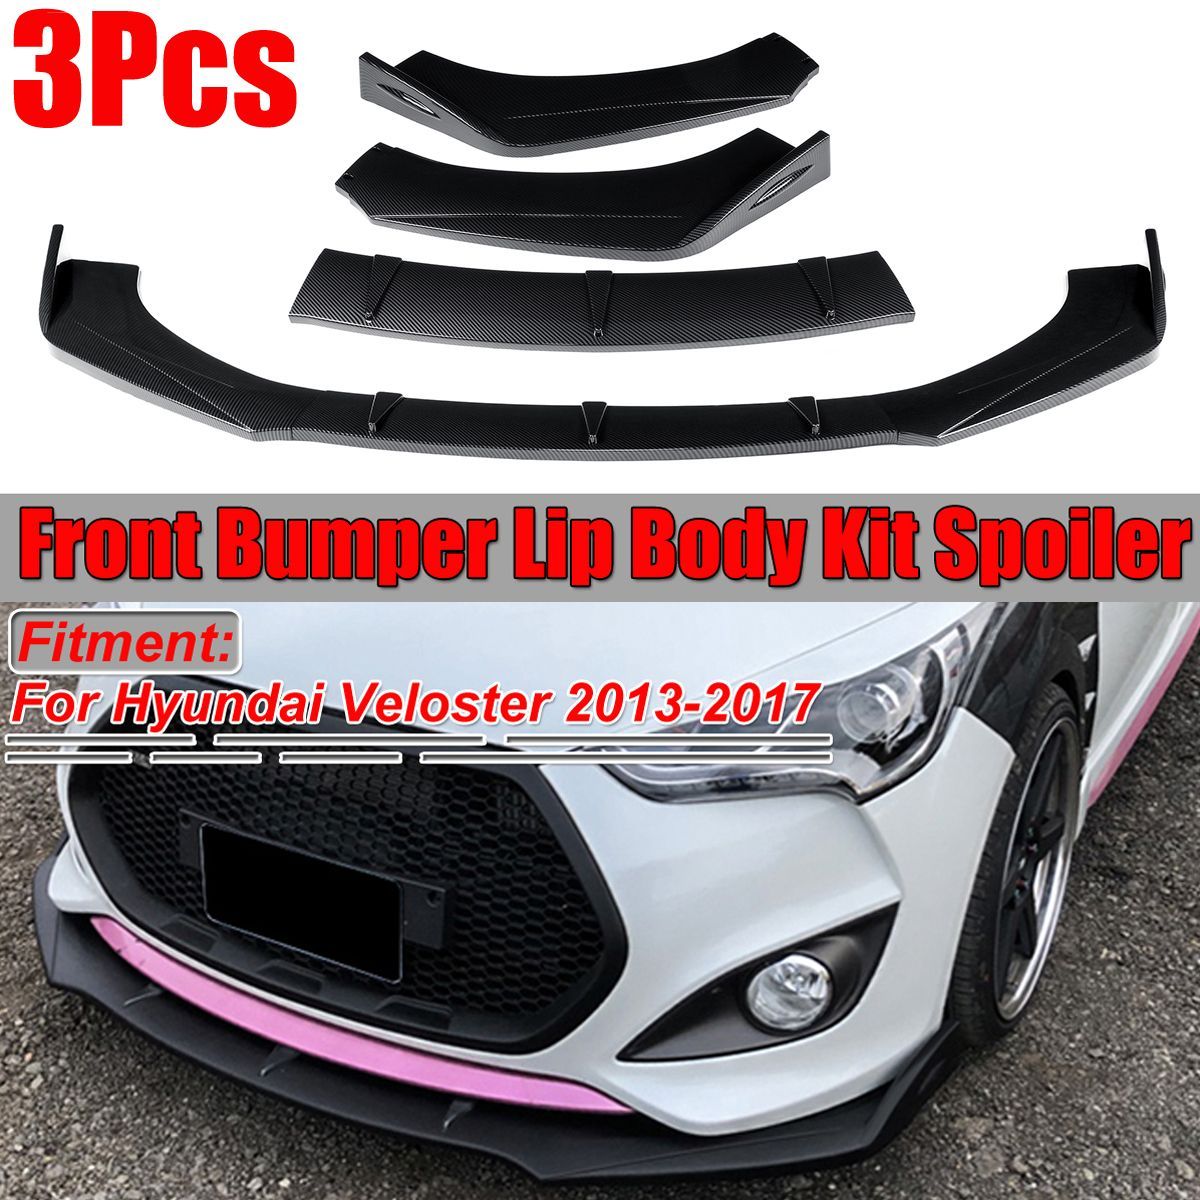 Carbon-Fiber-Look-Front-Bumper-Lip-Protector-Body-Kit-Spoiler-For-Hyundai-Veloster-2013-2017-1569913